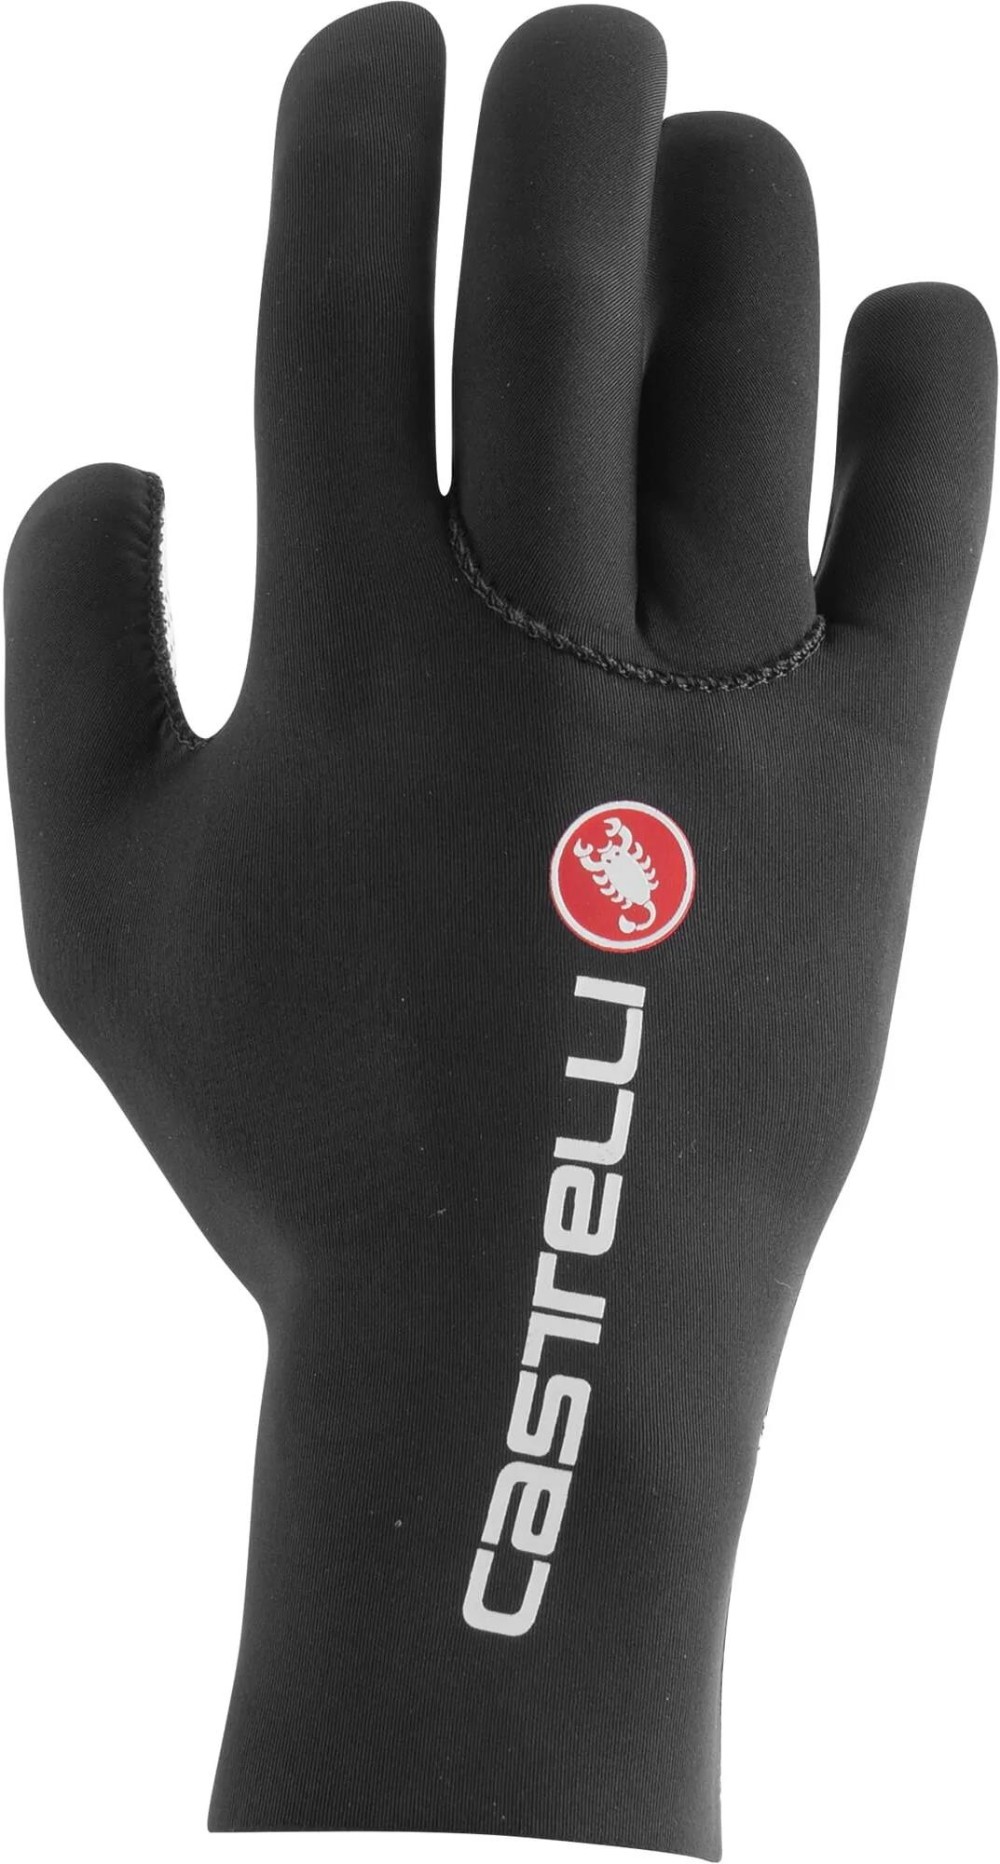 Castelli Diluvio C Long Finger Gloves